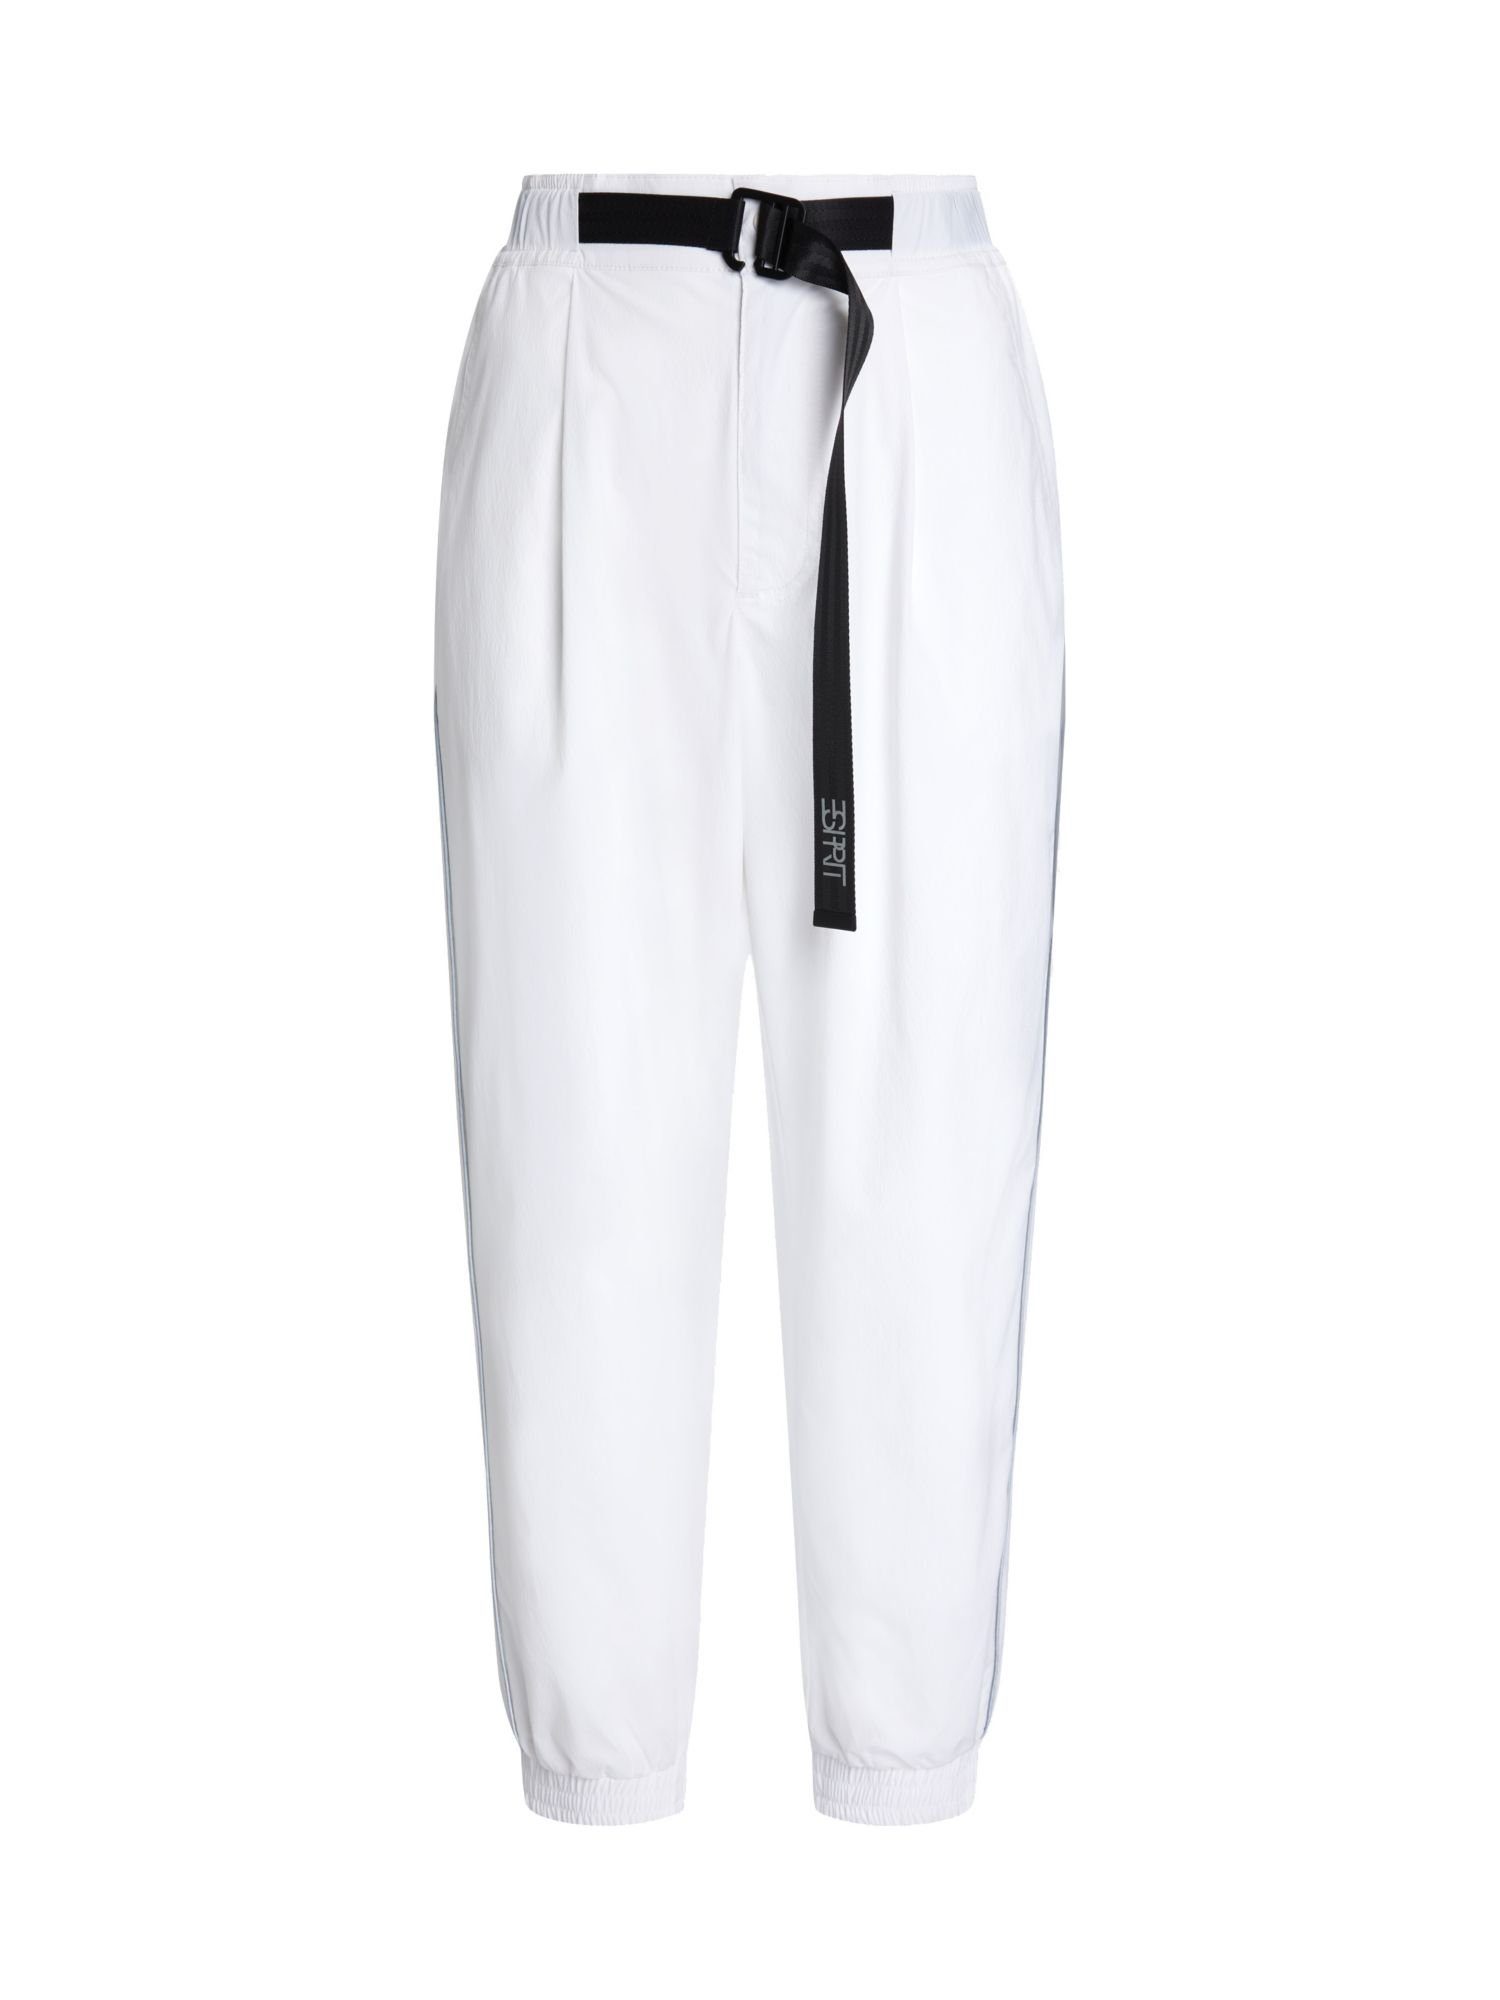 Esprit Jogger WHITE im High-Rise-Pants mit Gürtelschließe Pants Jogger-Style